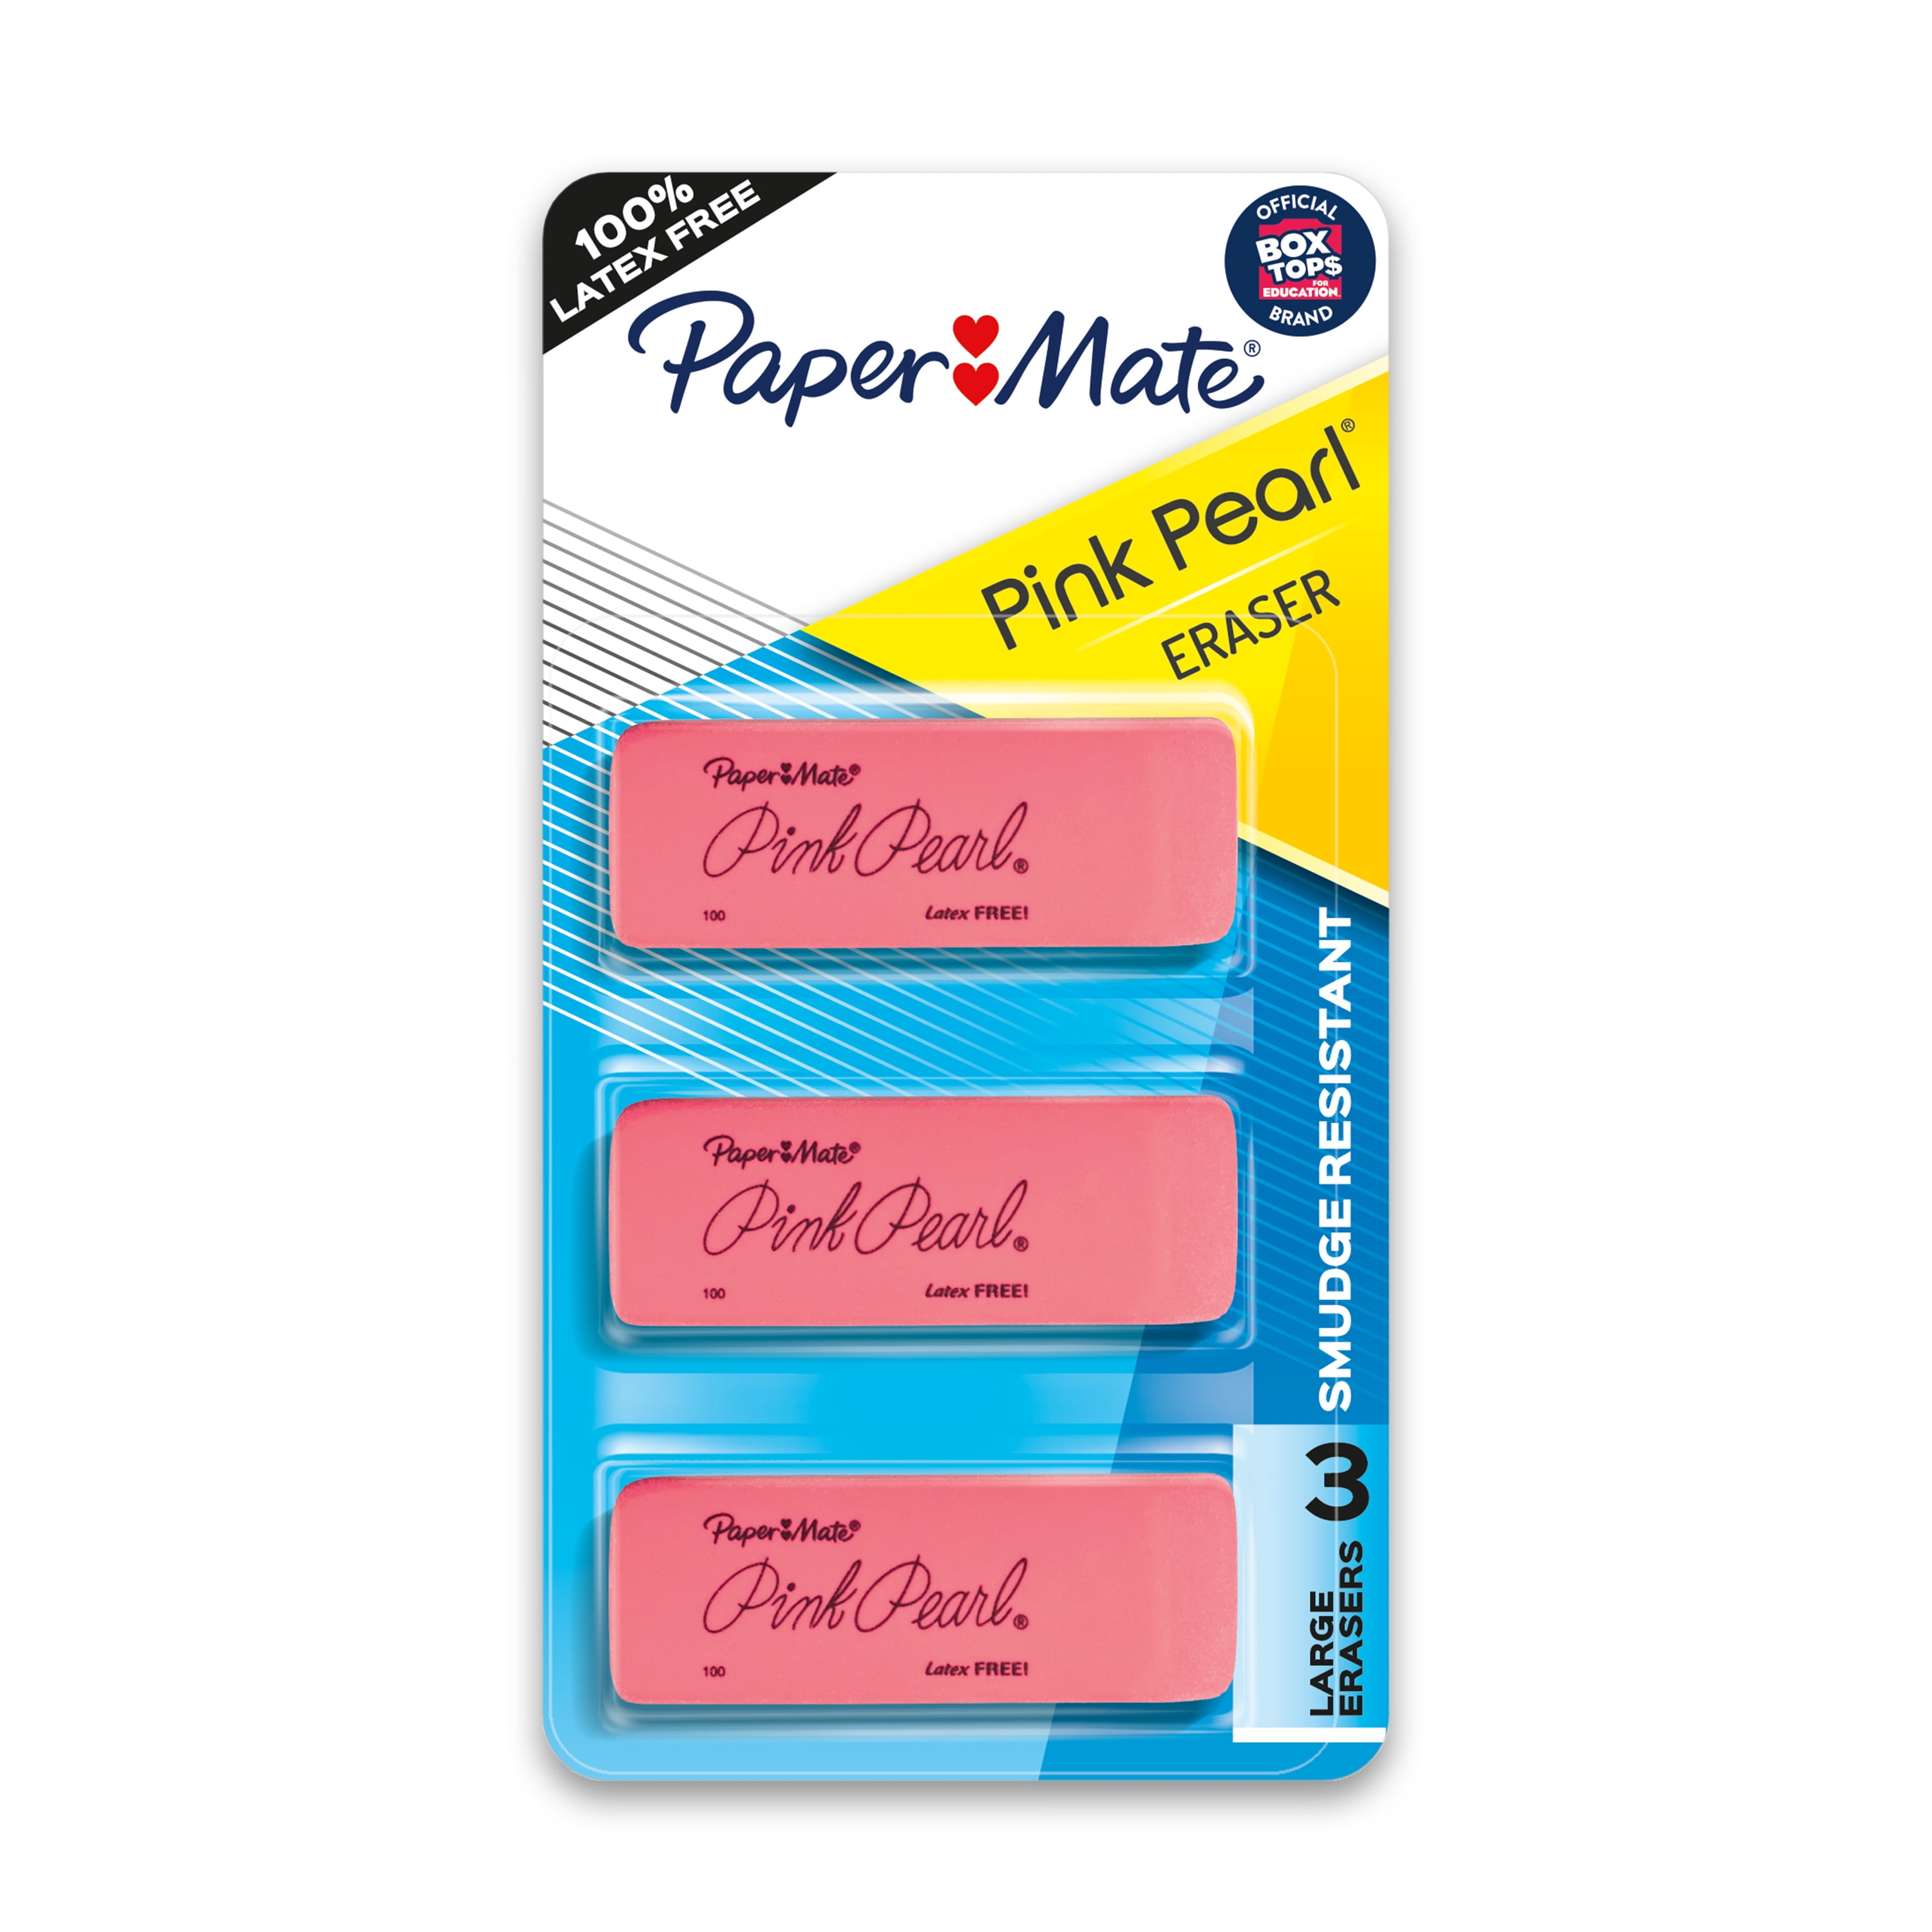 Paper Mate Pink Pearl Erasers Renewed Large 12 Packs of 3 36 Erasers 